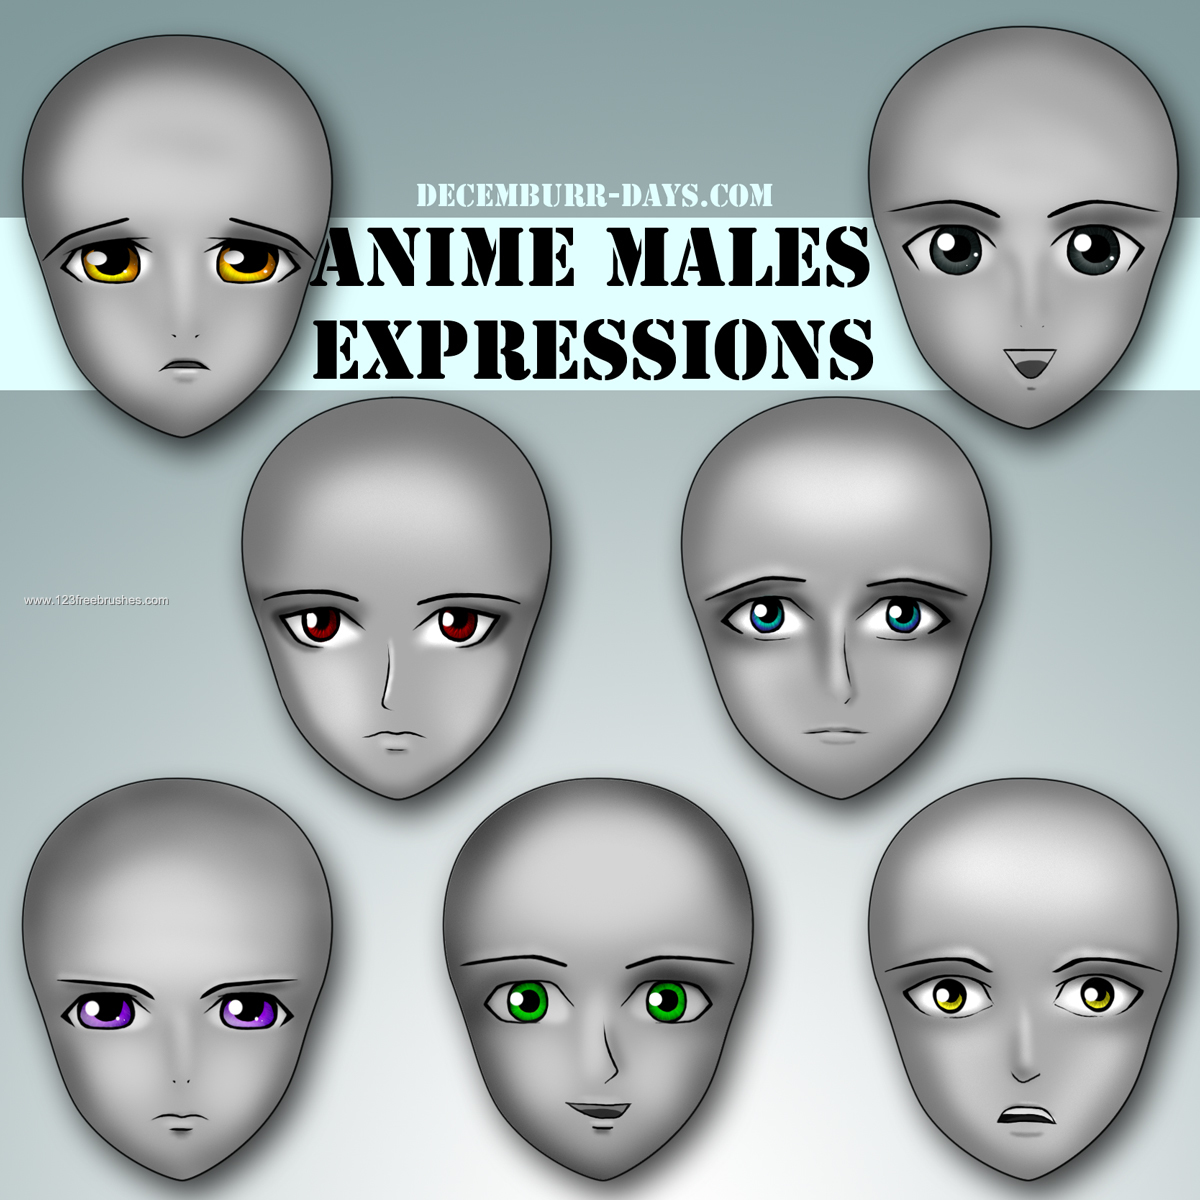 Anime Males